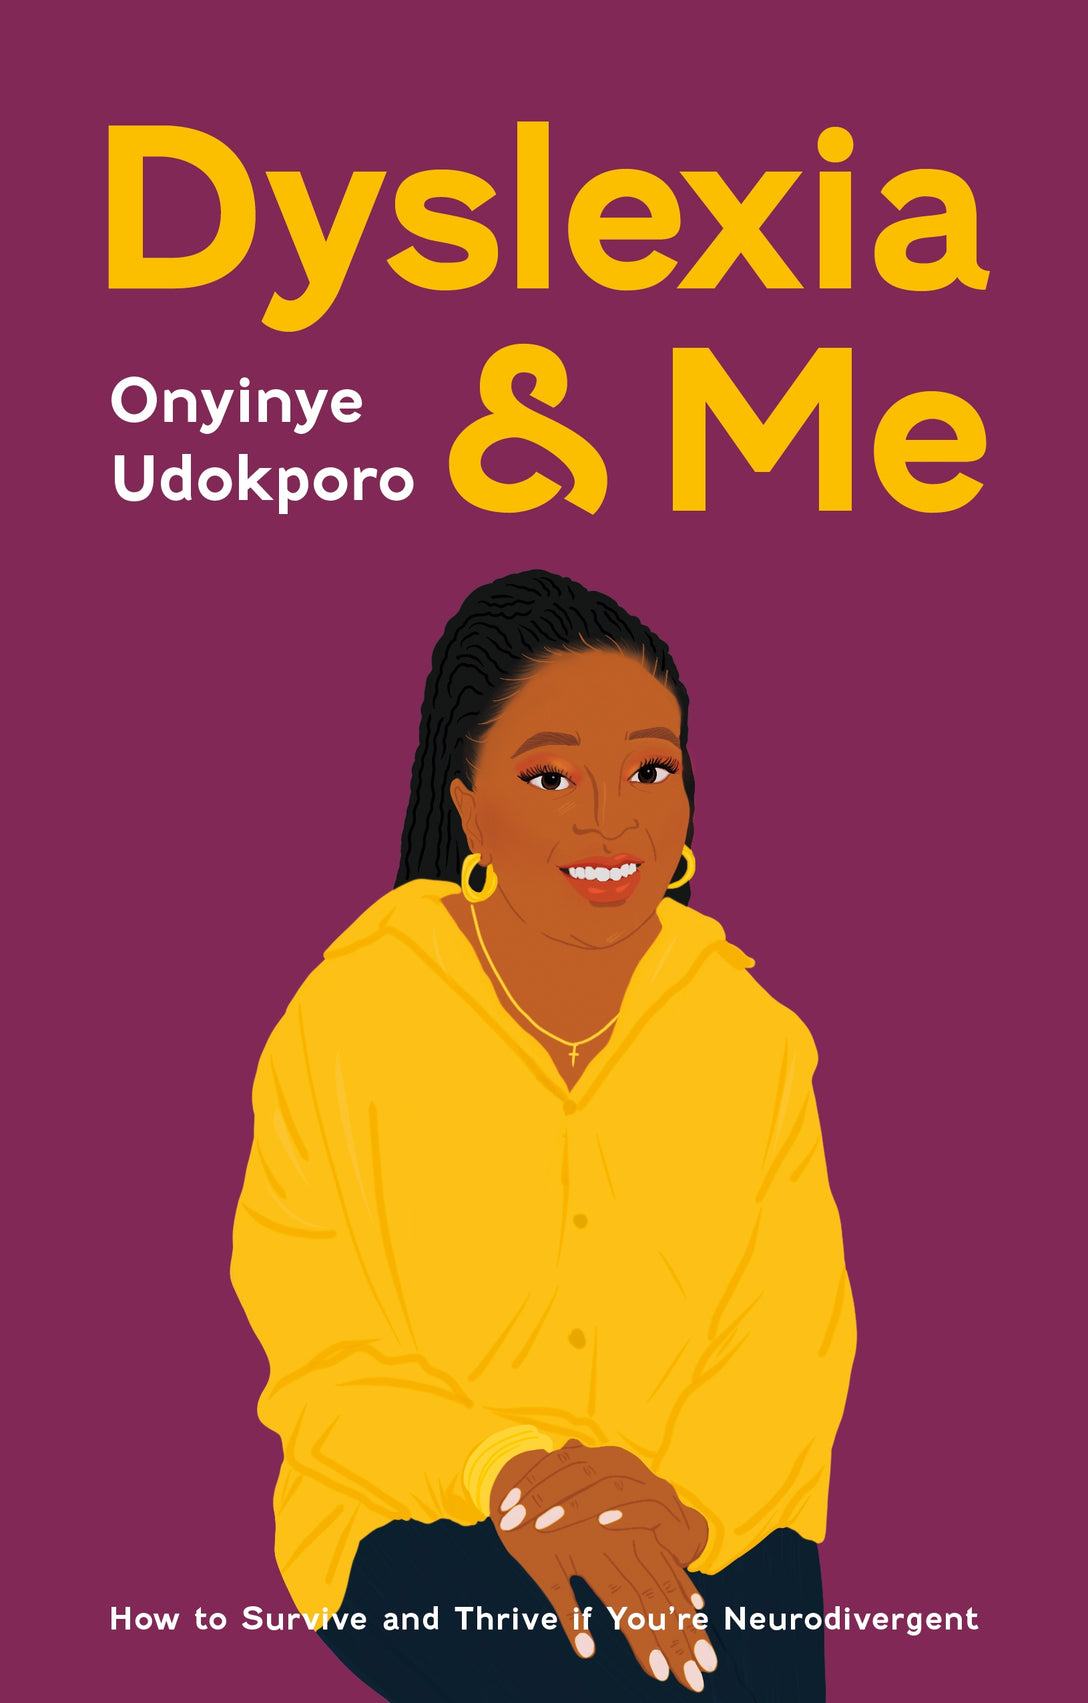 Dyslexia and Me by Onyinye Udokporo